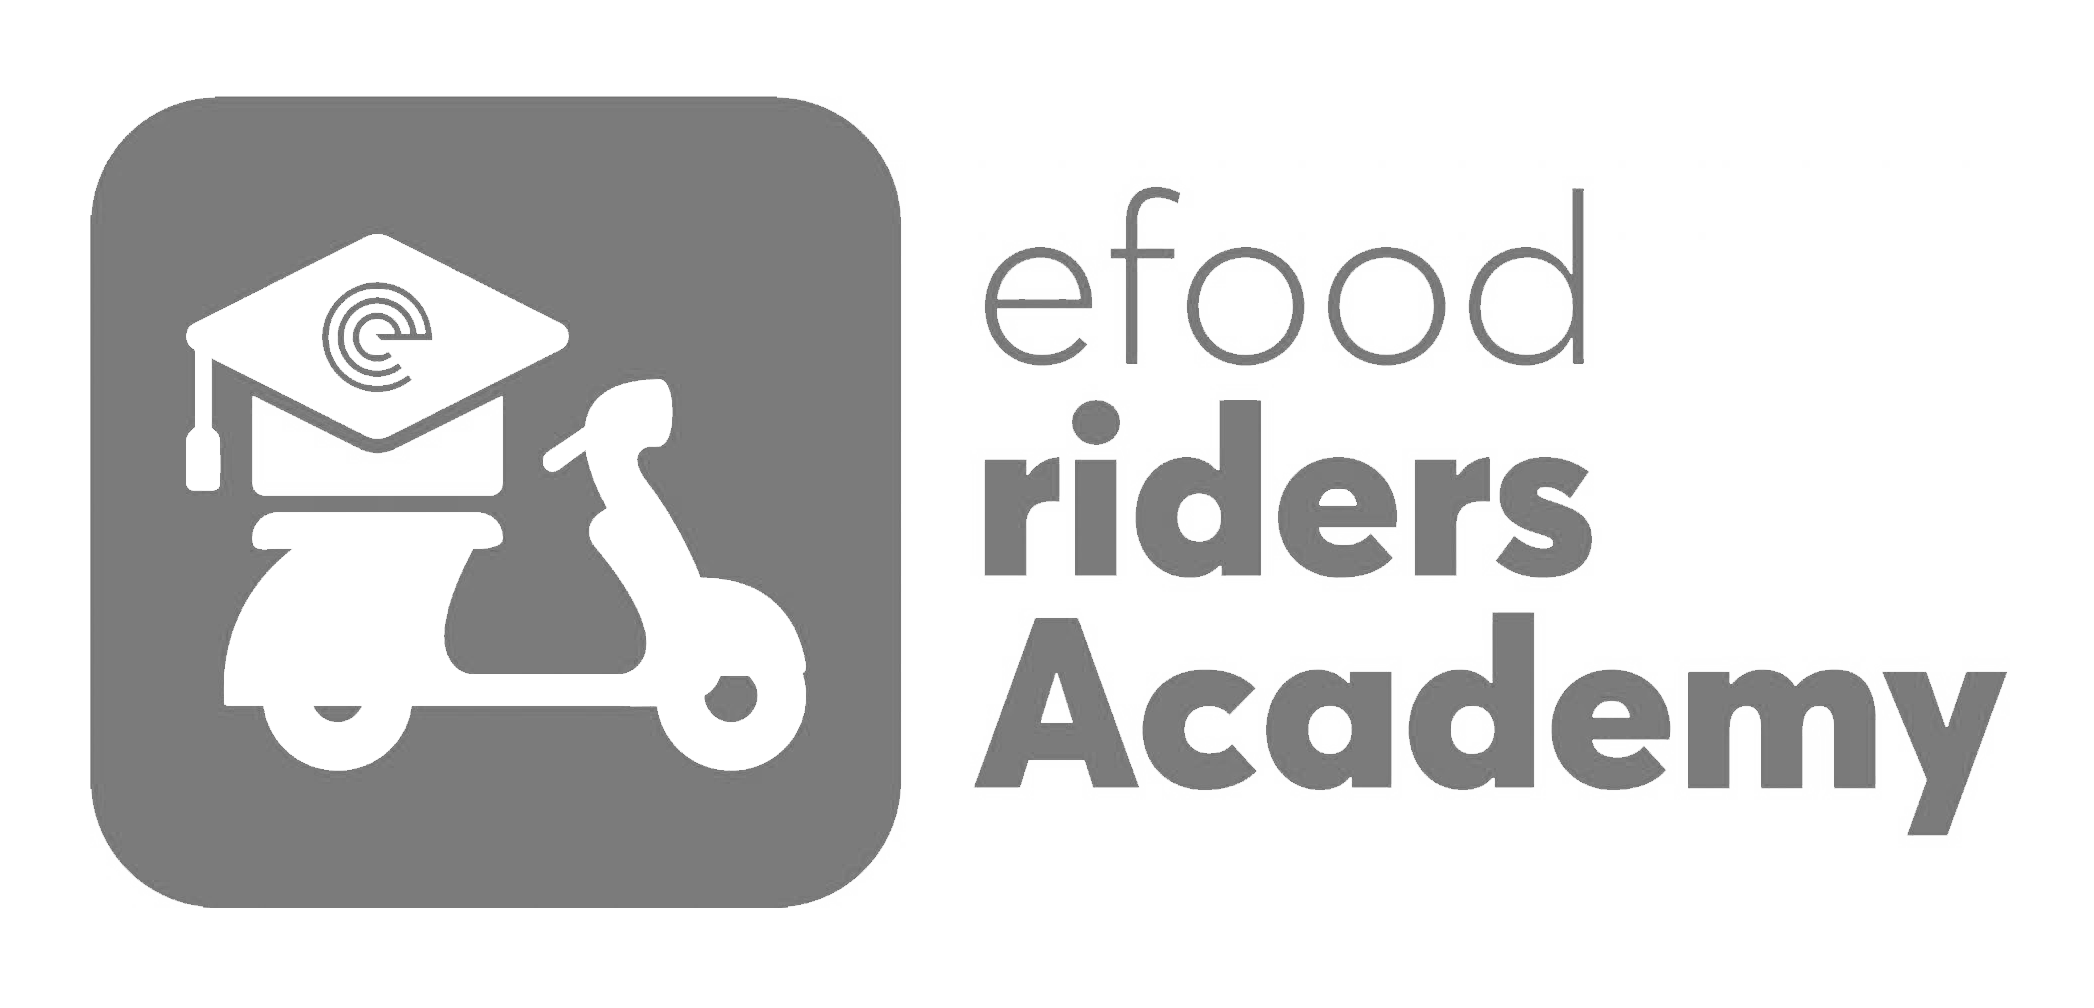 Efood riders academy